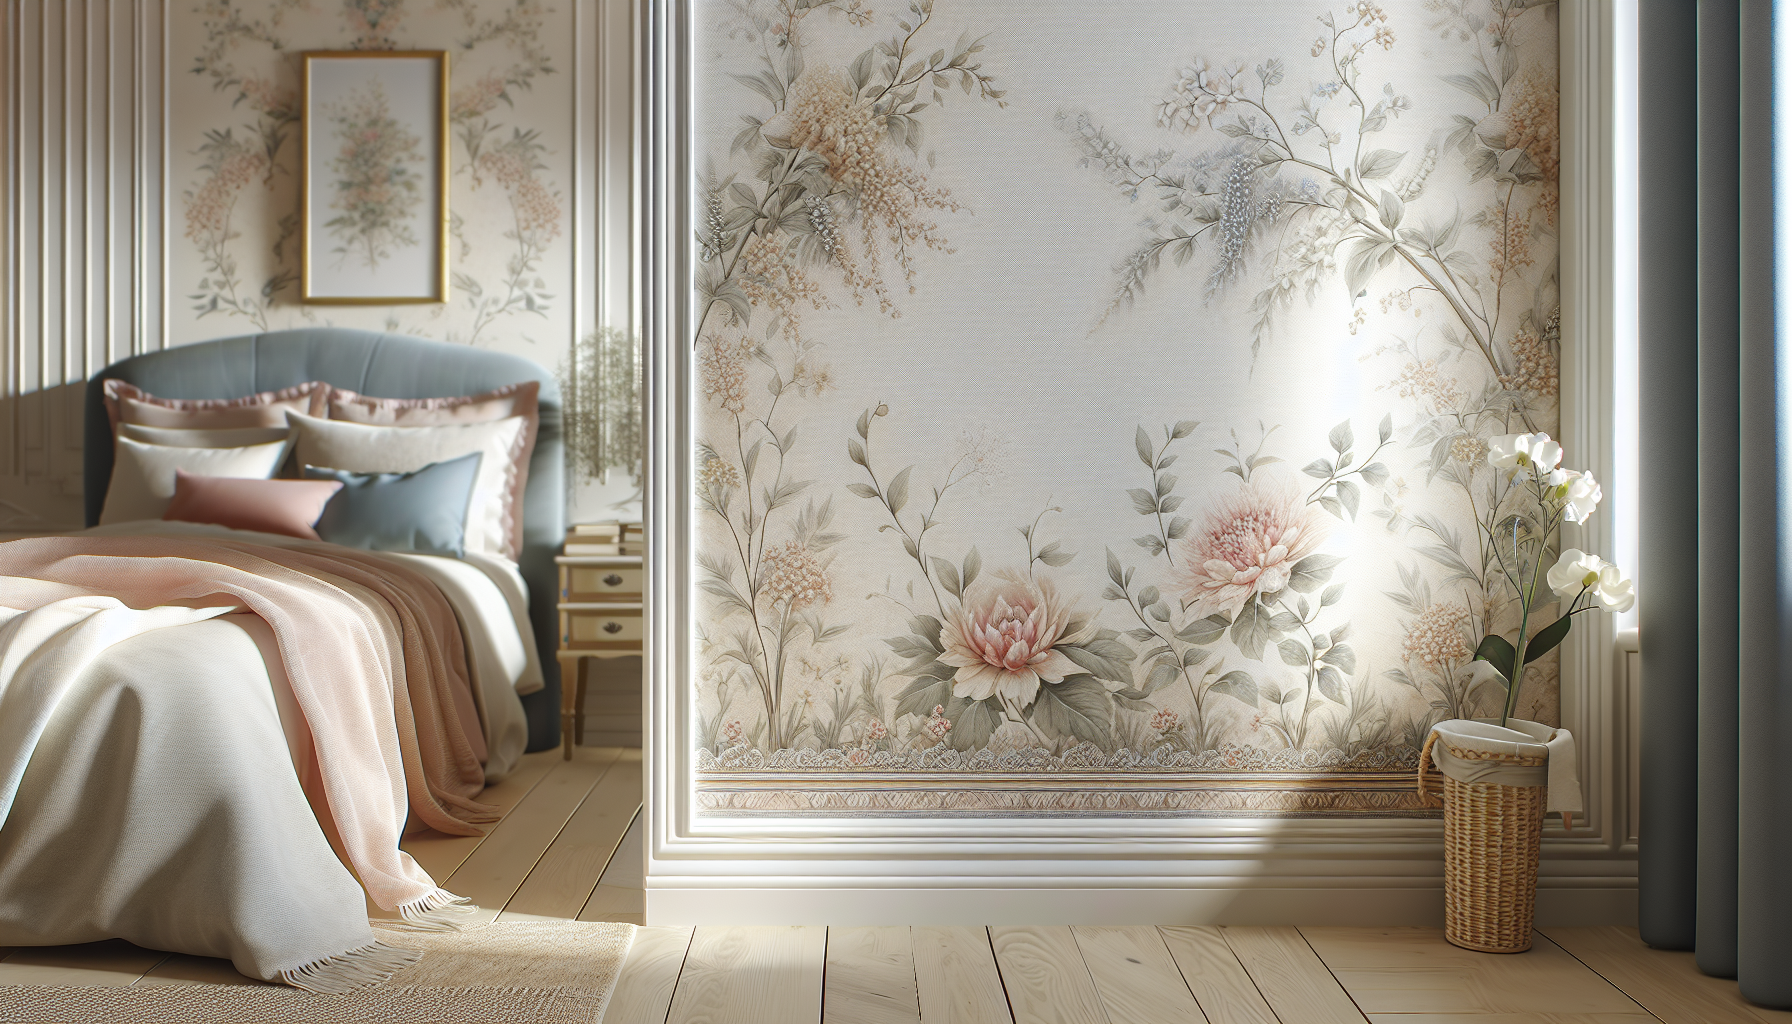 Wallpaper Borders For Bedrooms: Dreamy Decor